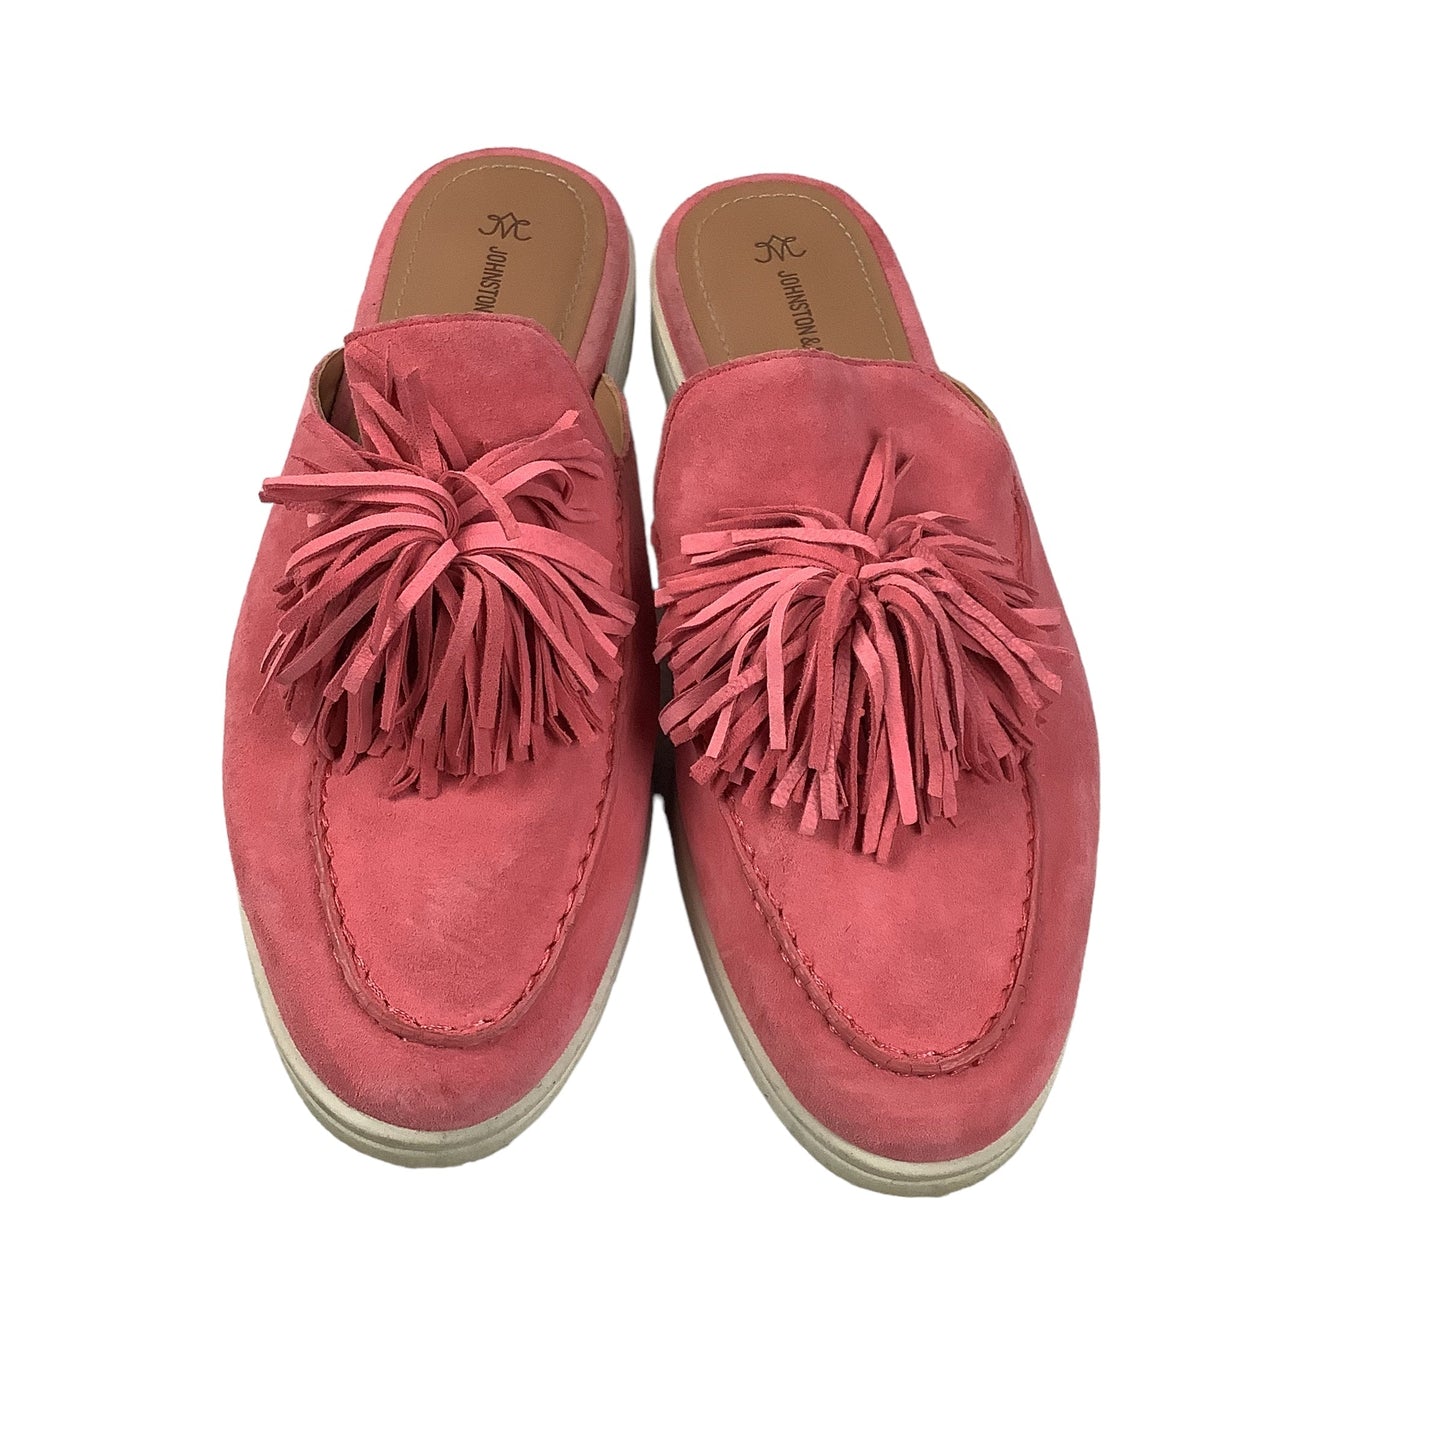 Pink Shoes Flats Johnston & Murphy, Size 8.5